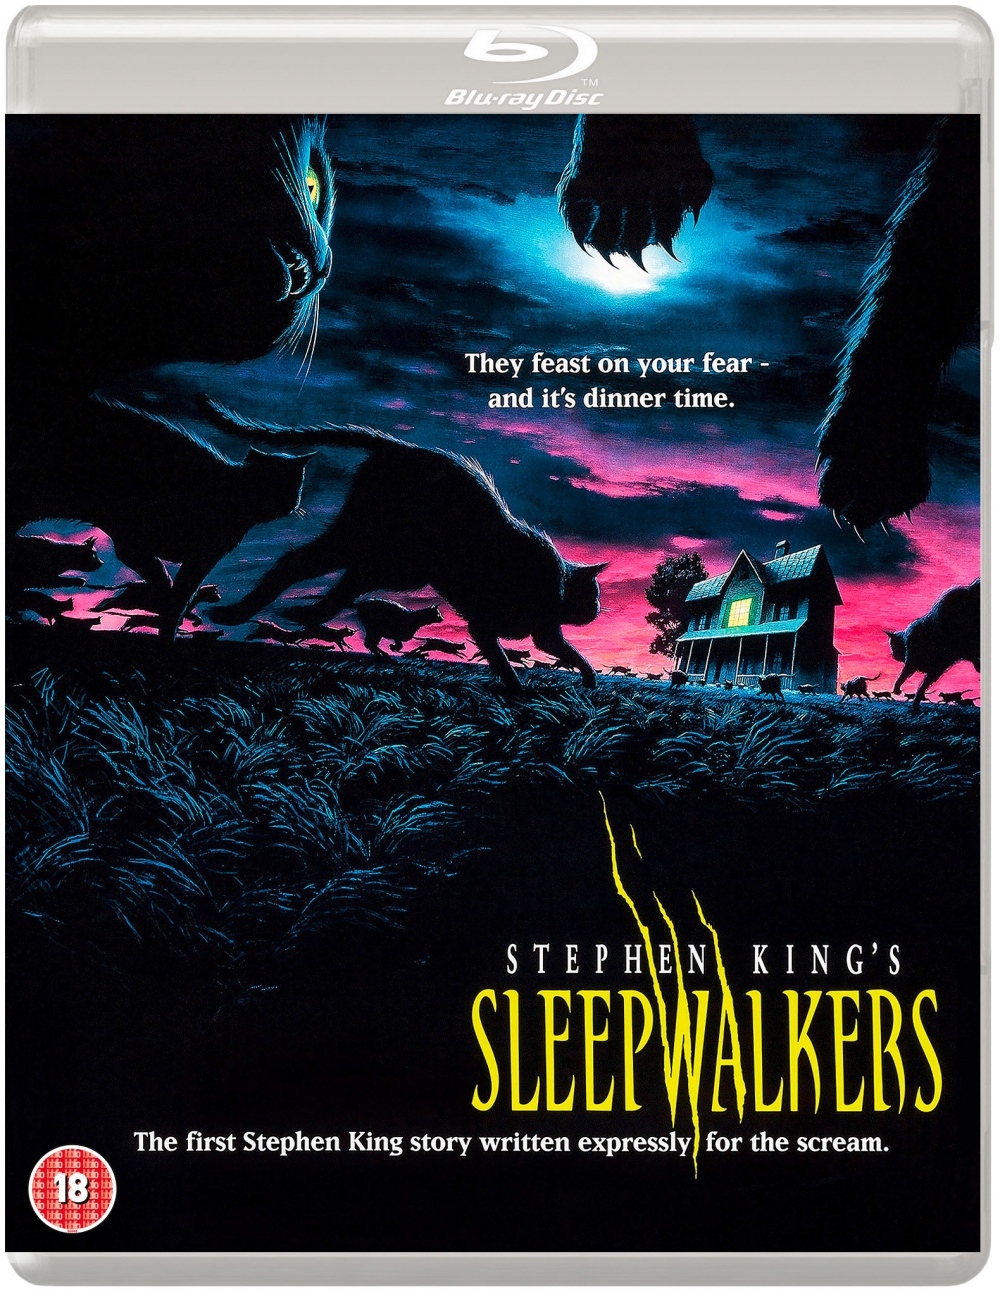 Sleepwalkers Blu-ray UK DVD Cover Art